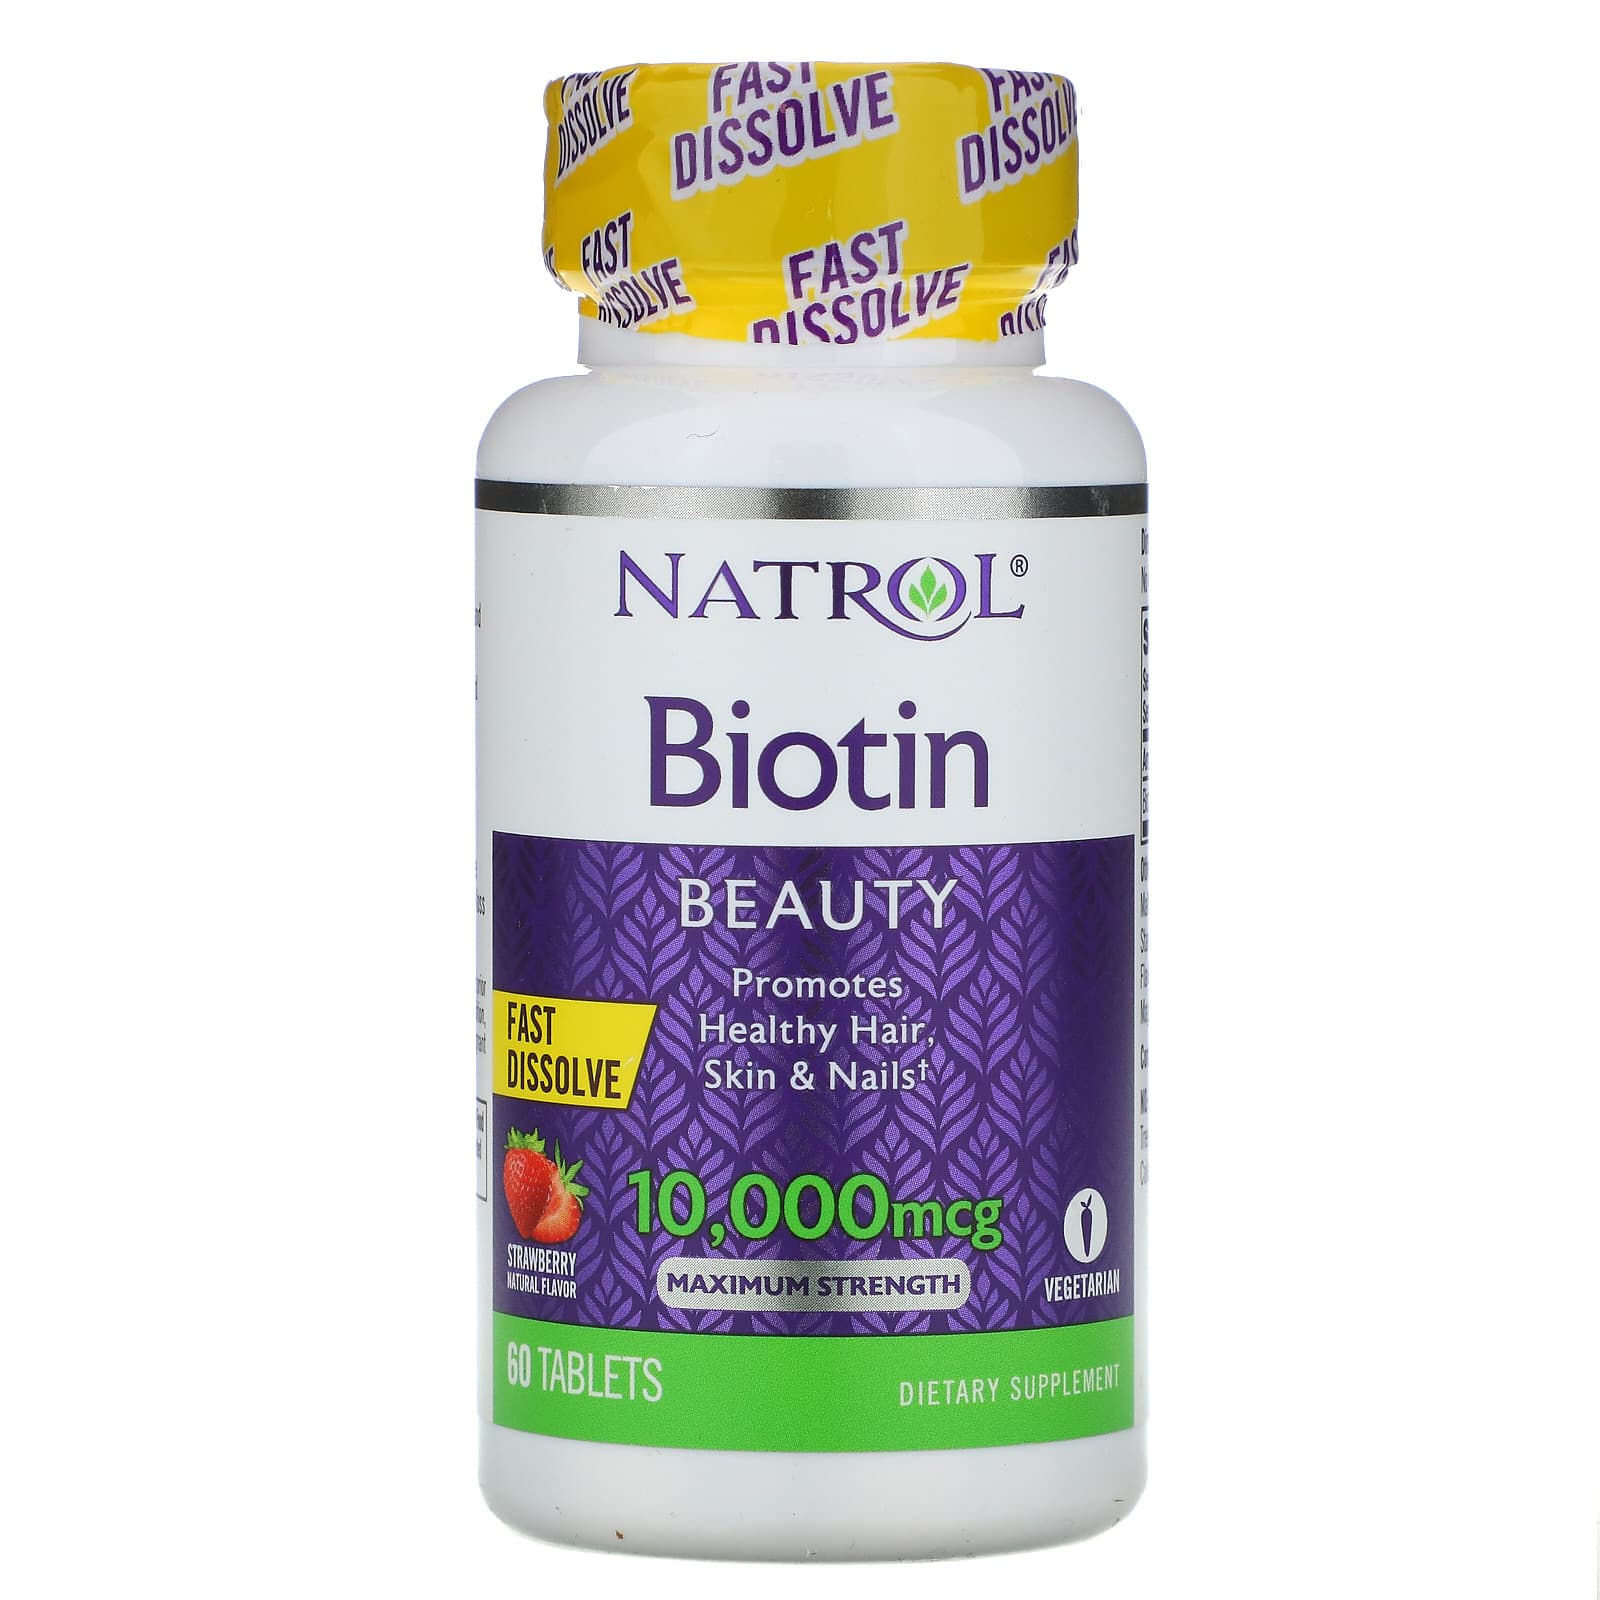 Natrol Biotin Beauty Maximum Strength tablets with Strawberry 10000 mcg - 60 tablets